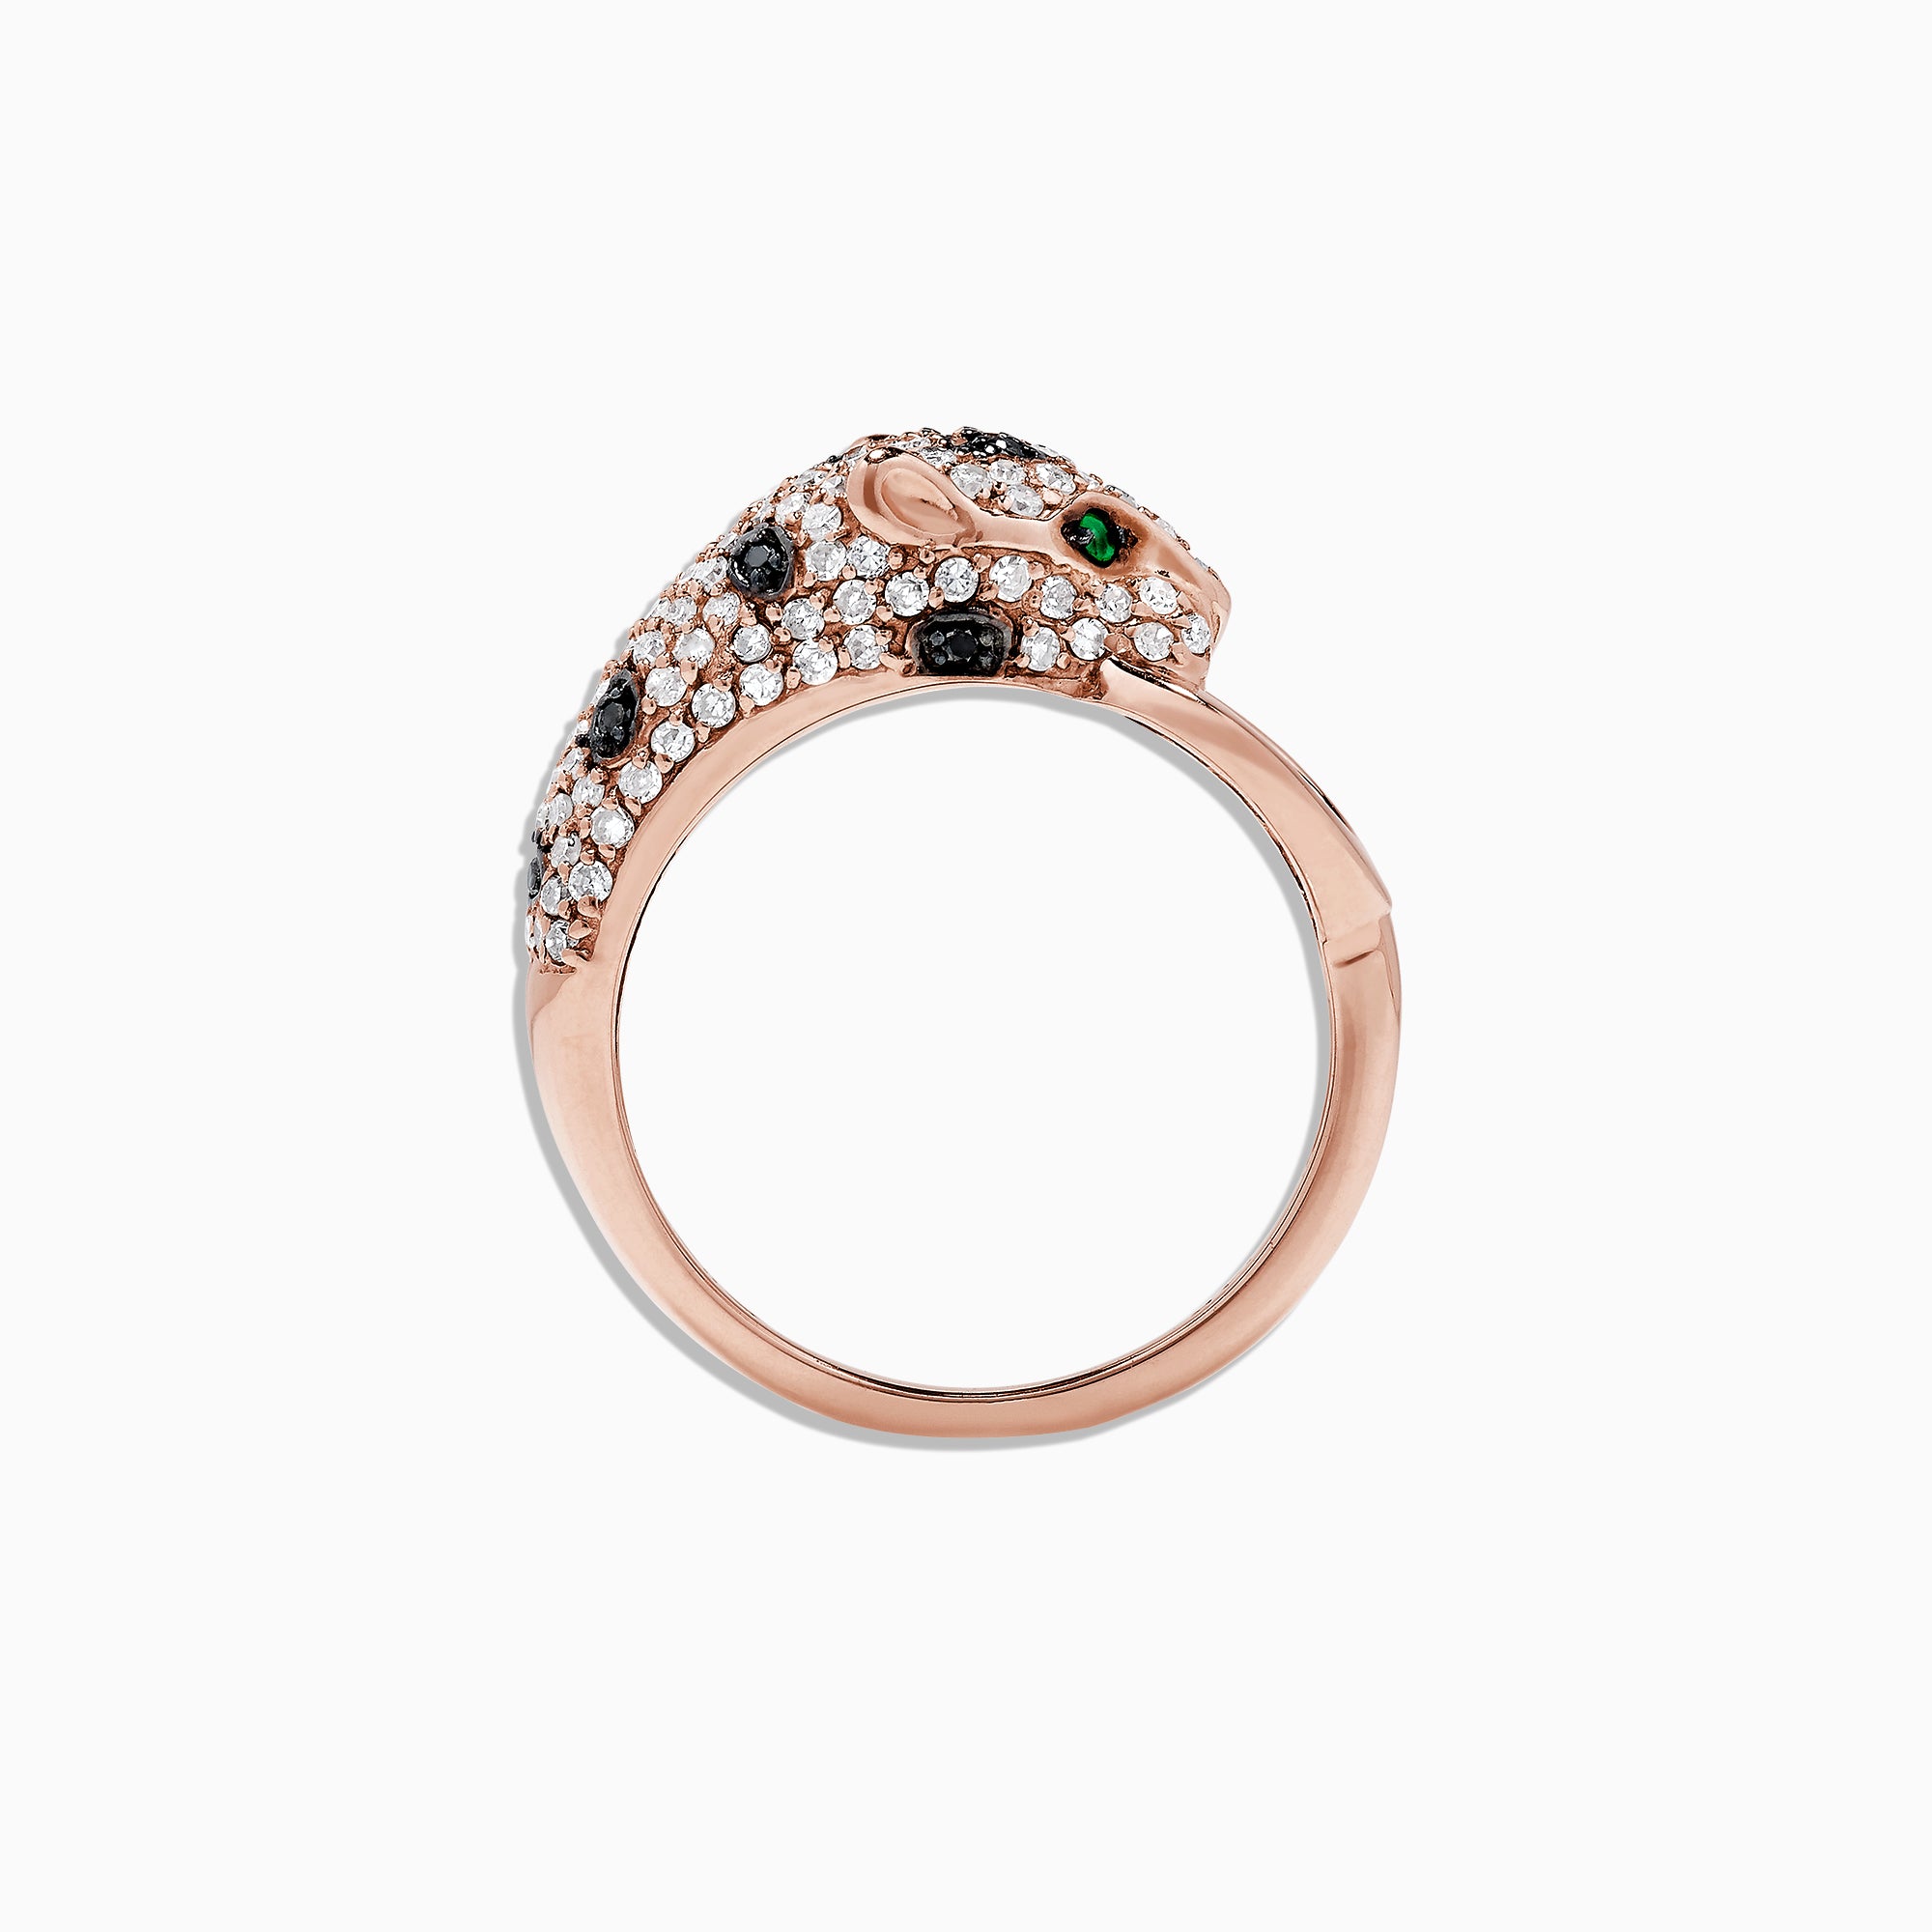 Effy Signature 14K Rose Gold Diamond and Emerald Ring, 0.66 TCW